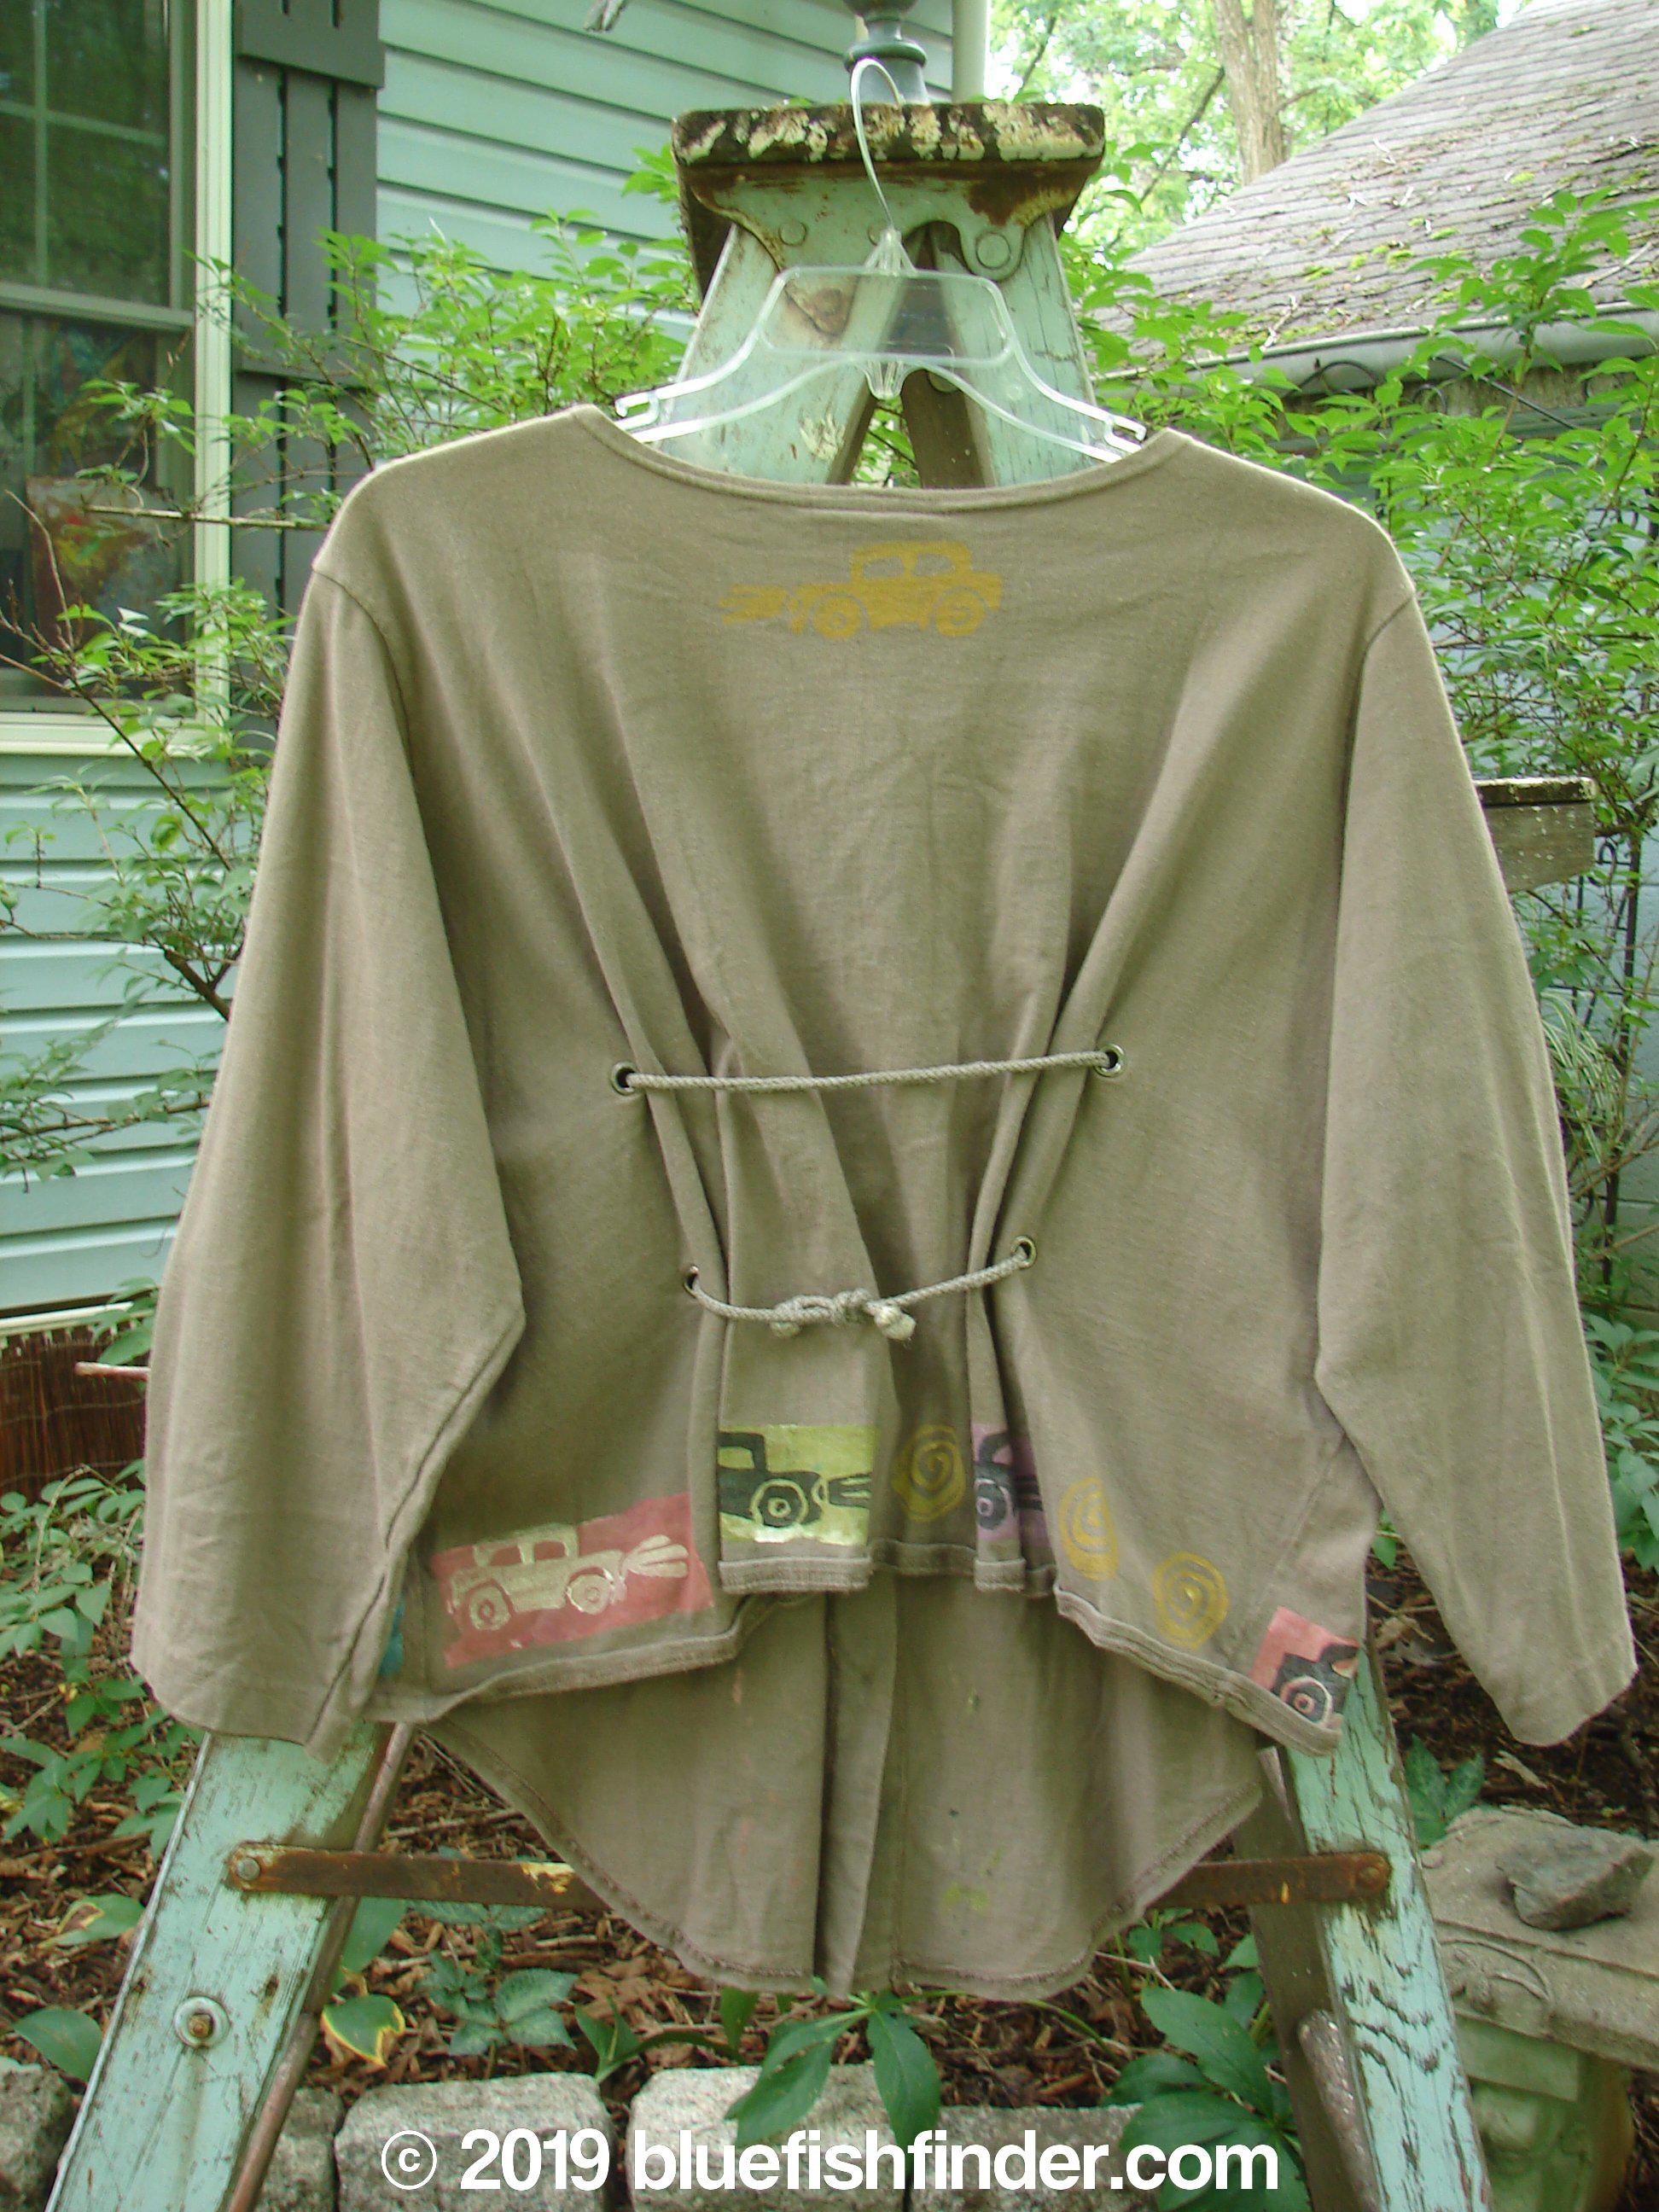 Image alt text: 1993 Tie Back Jacket featuring a shirt with a tie on a swinger, vintage buttons, drop shoulders, and a unique antique car theme paint.